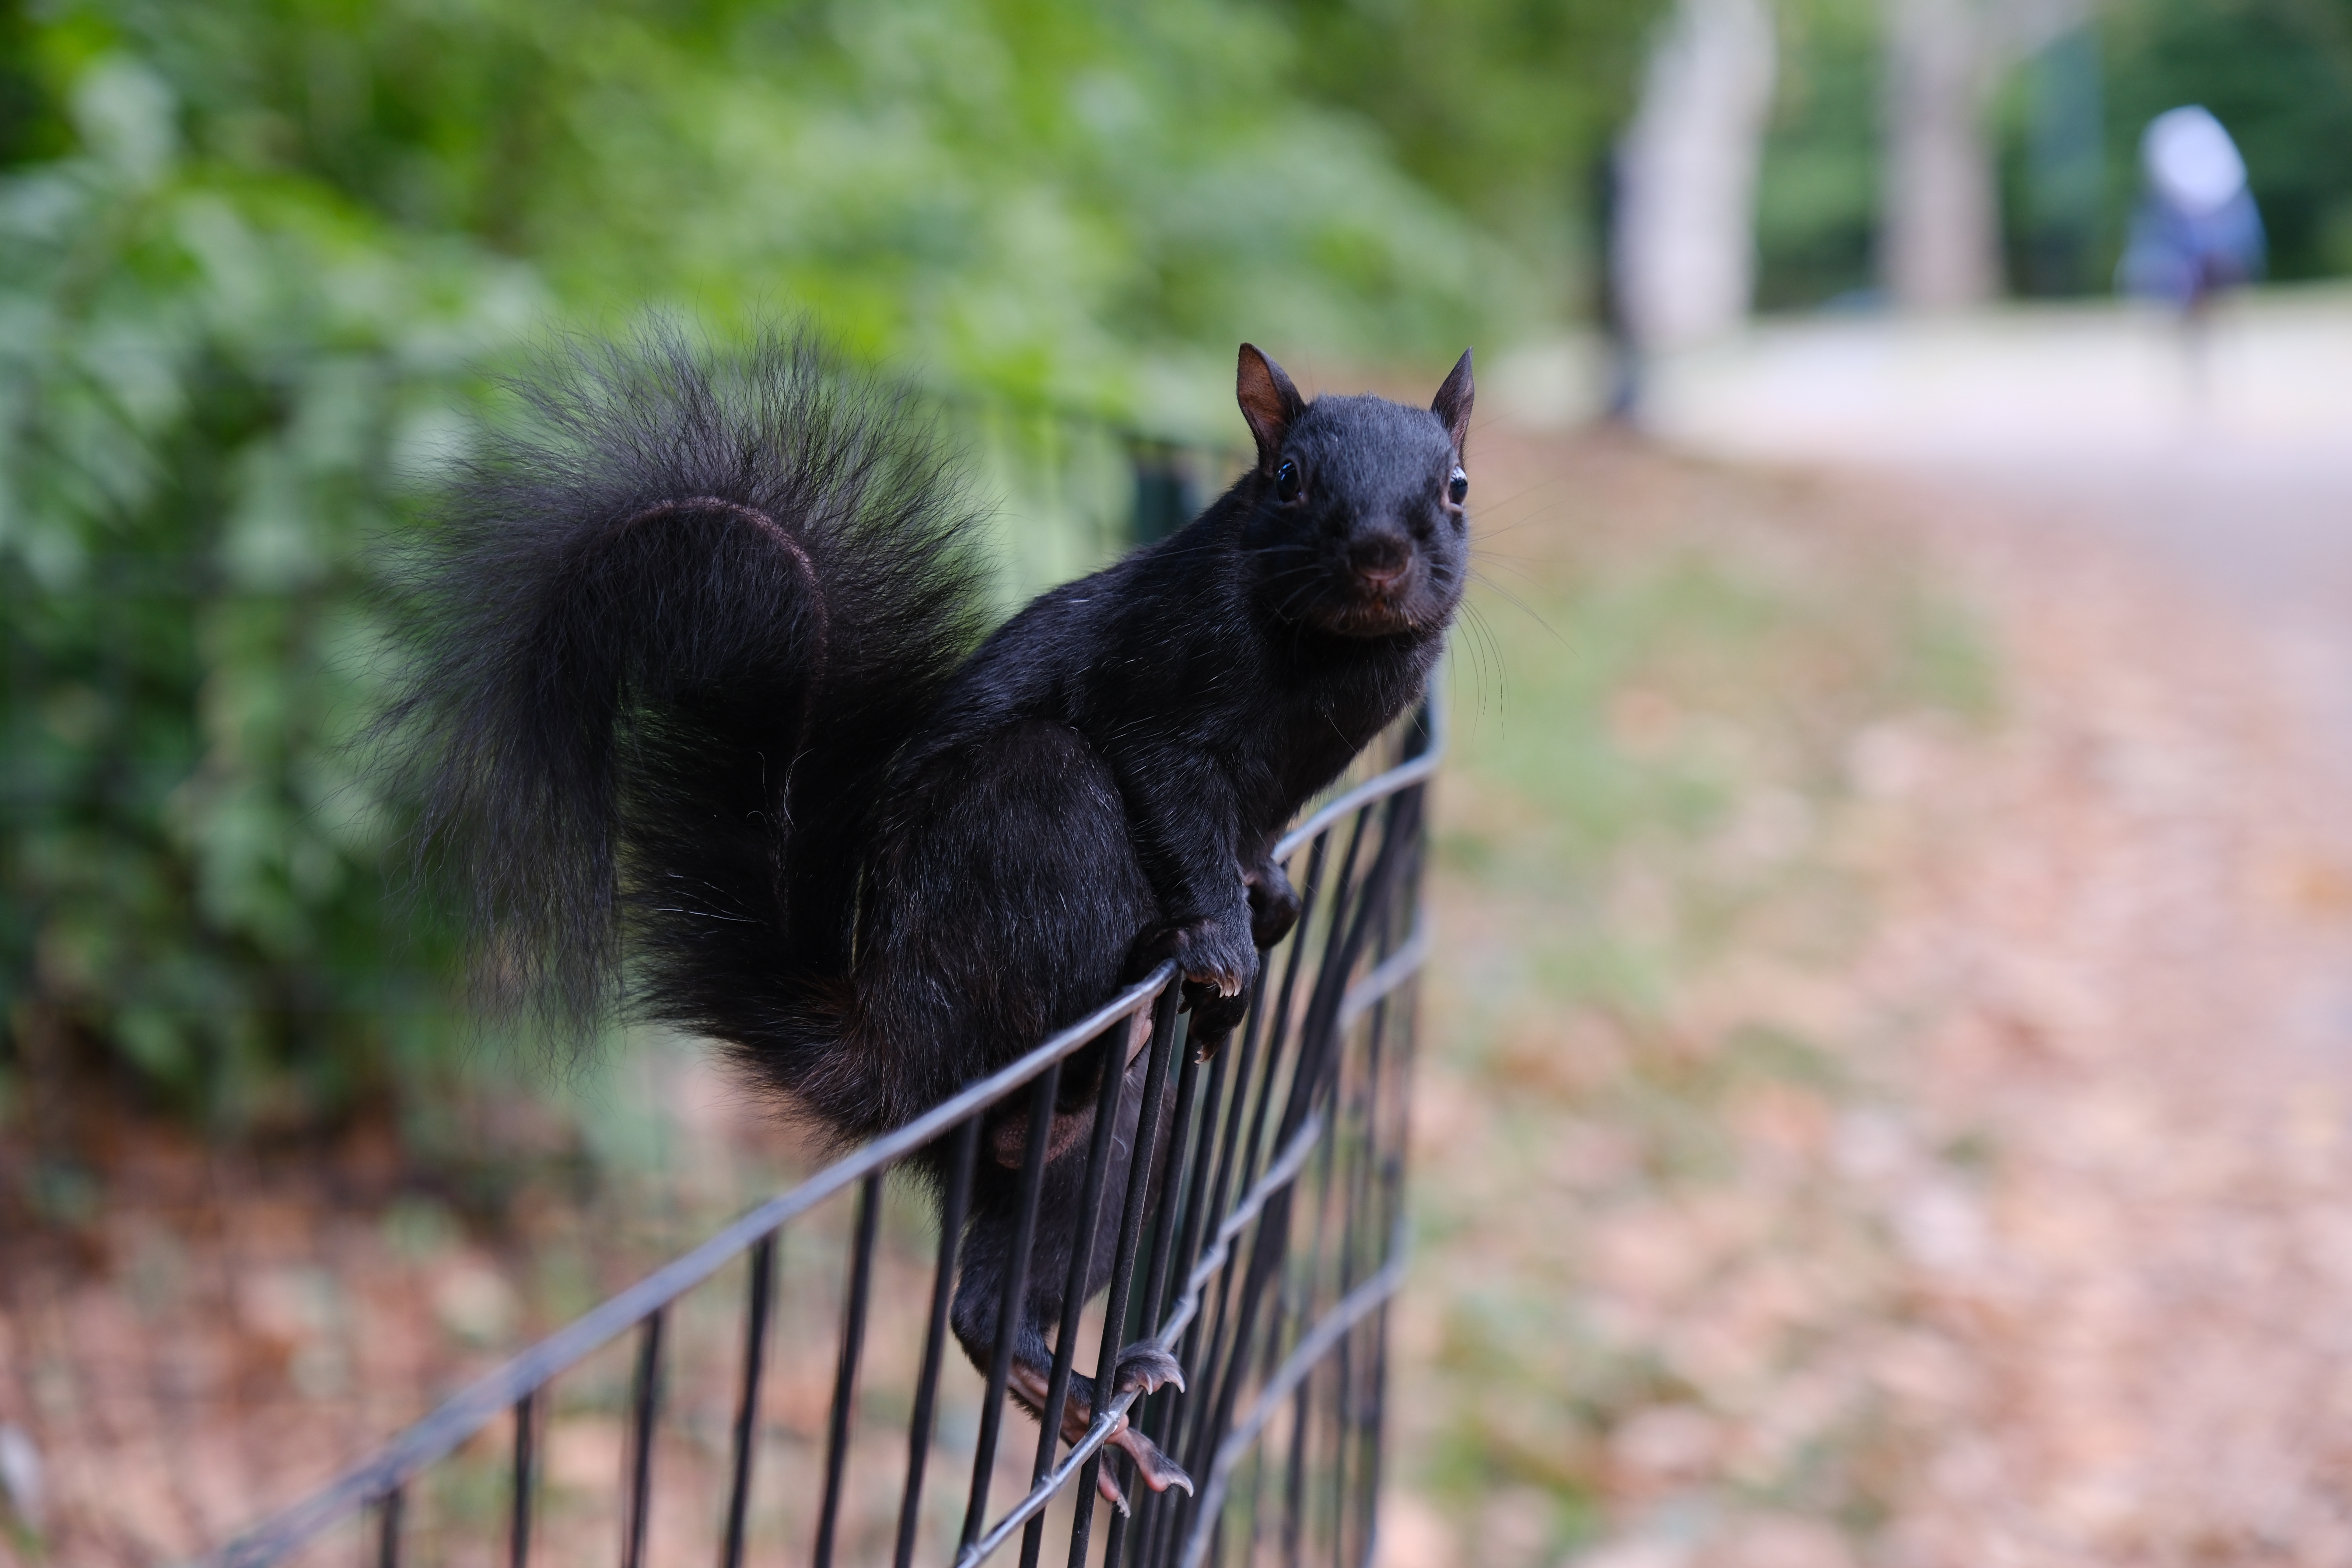 Black squirrel, 1/120s, f/3.2, ISO250, 55mm, +0.3EV, Photo: Joshua Waller